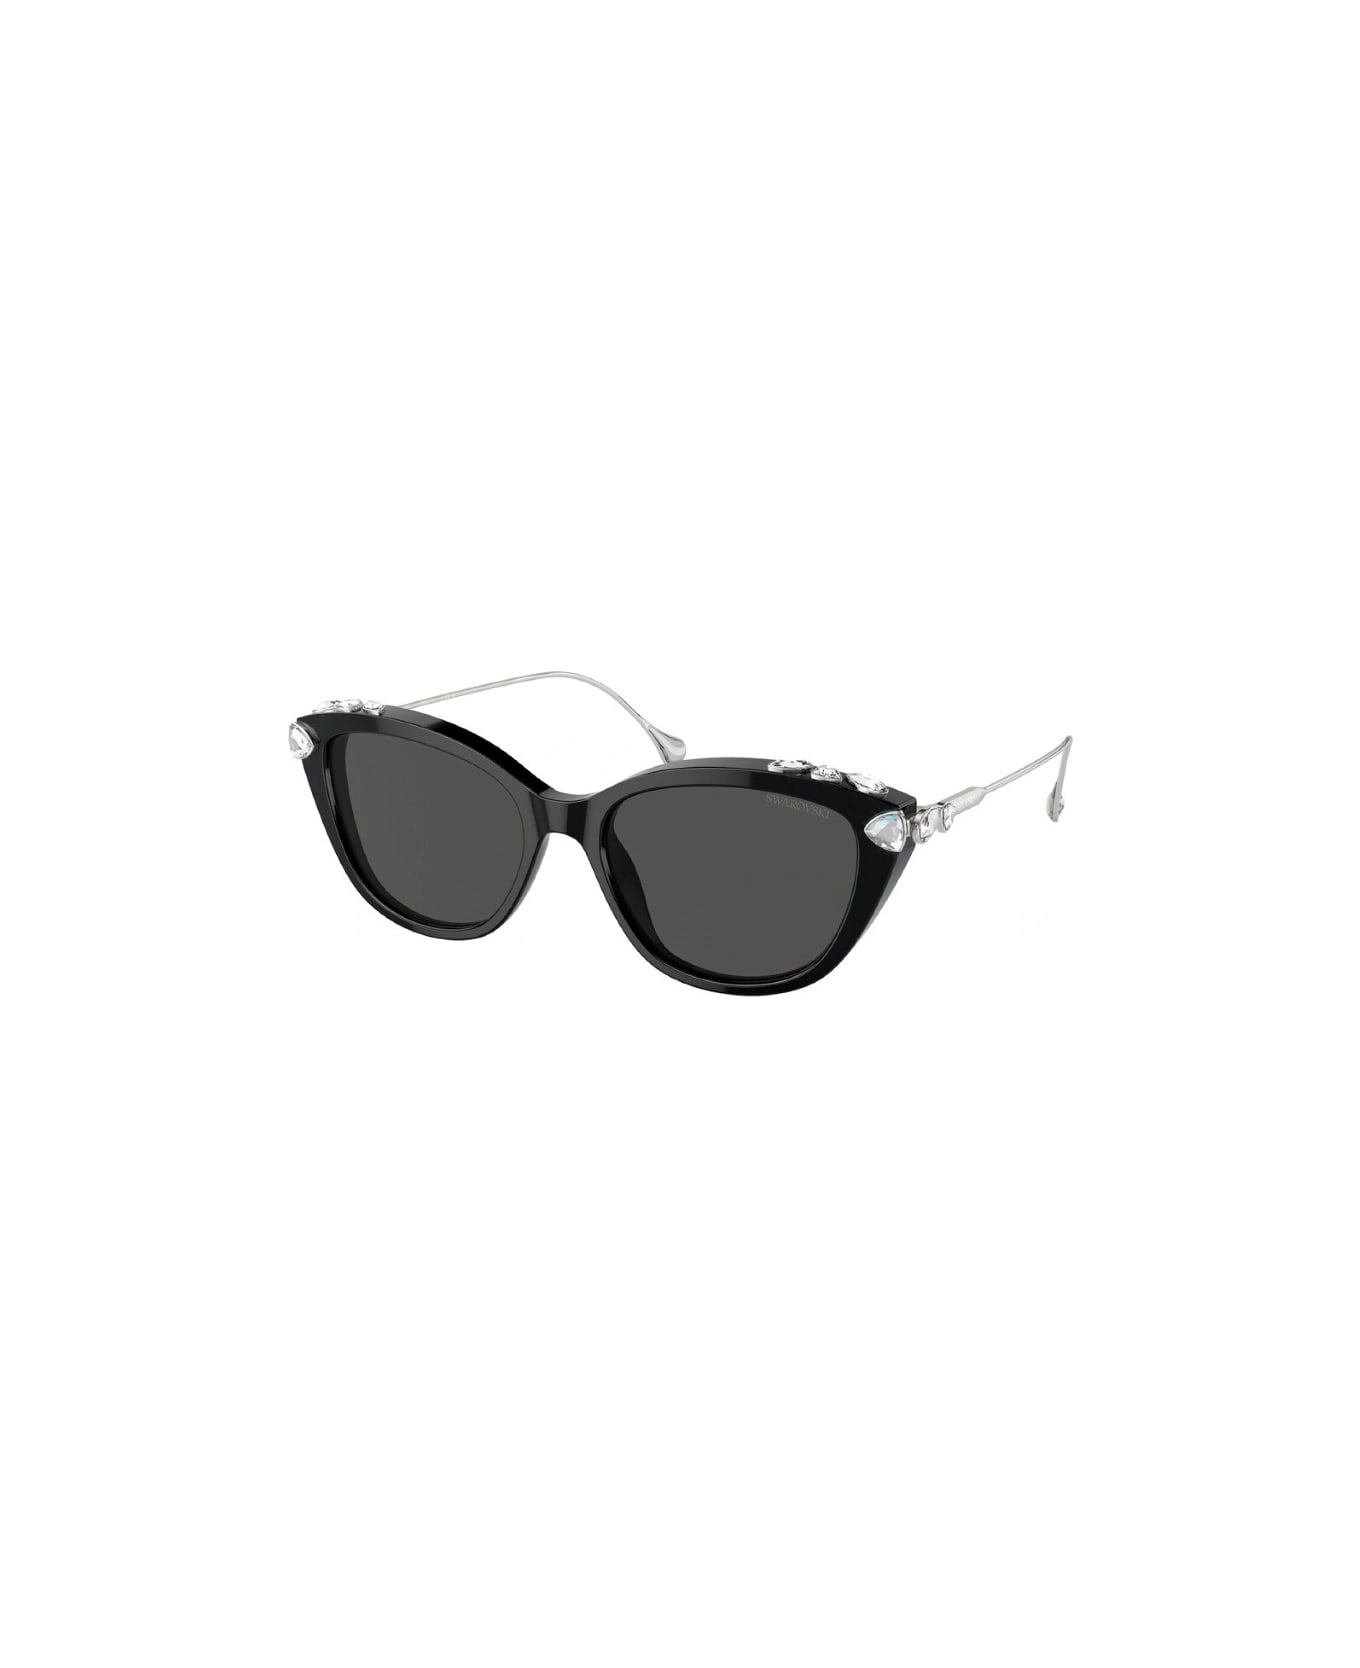 Swarovski SK6010 103887 Sunglasses - Black astine silver